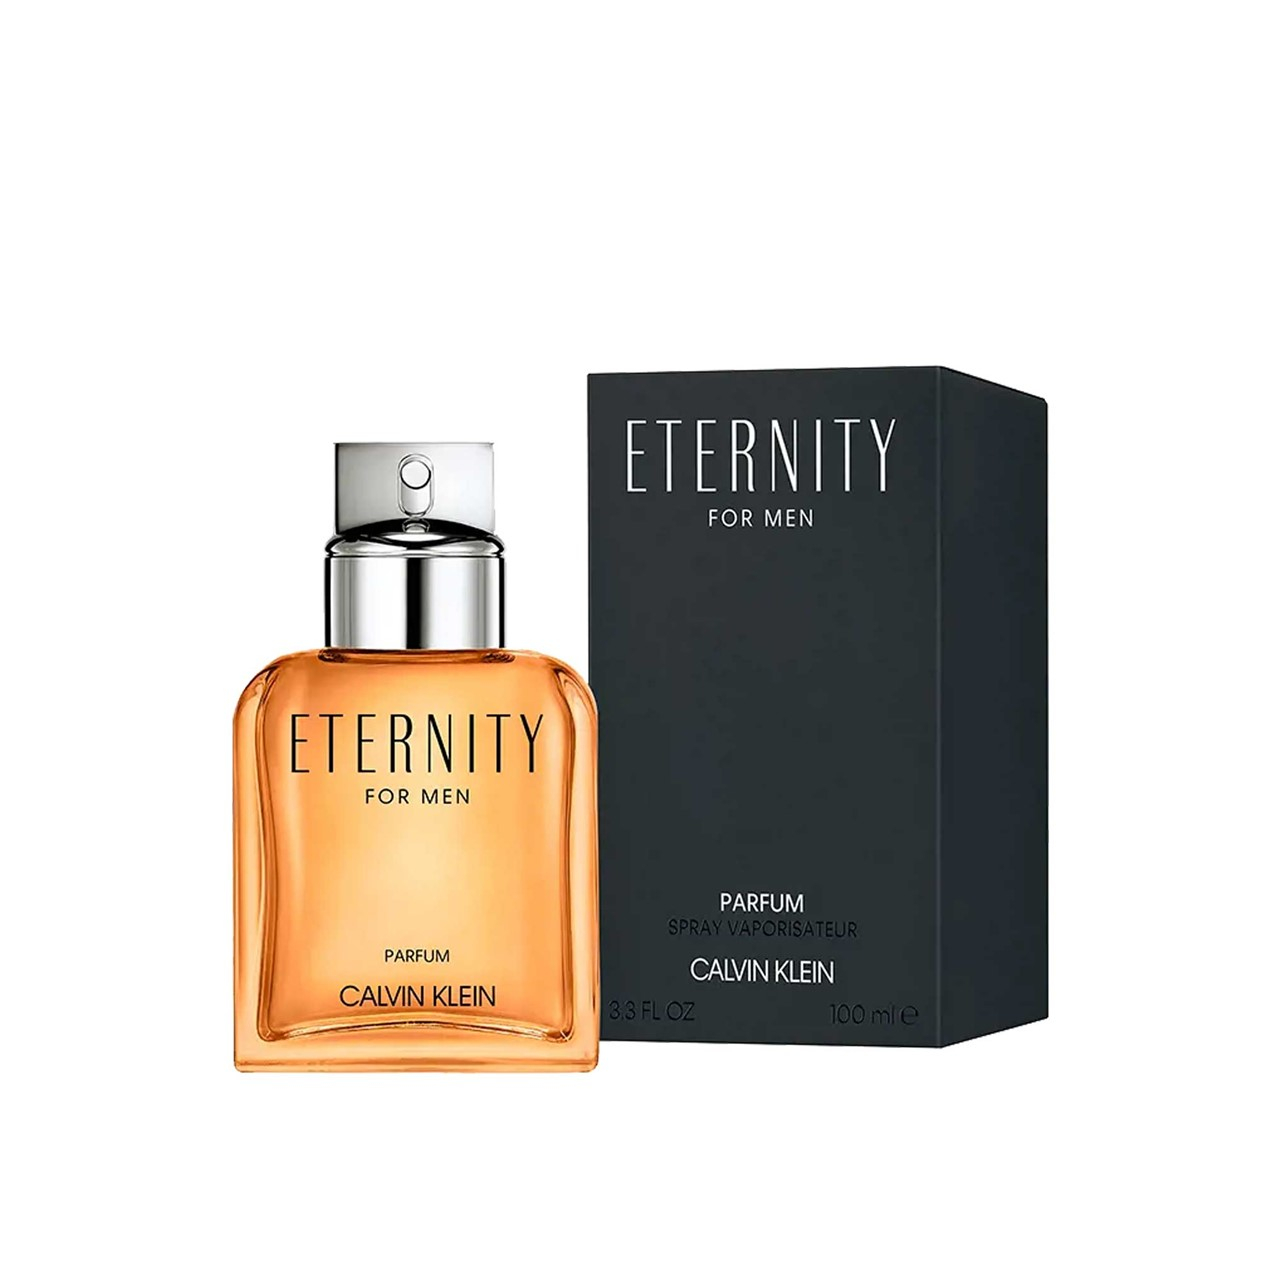 Calvin Klein Eternity For Men Parfum 100ml (3.3 fl oz)